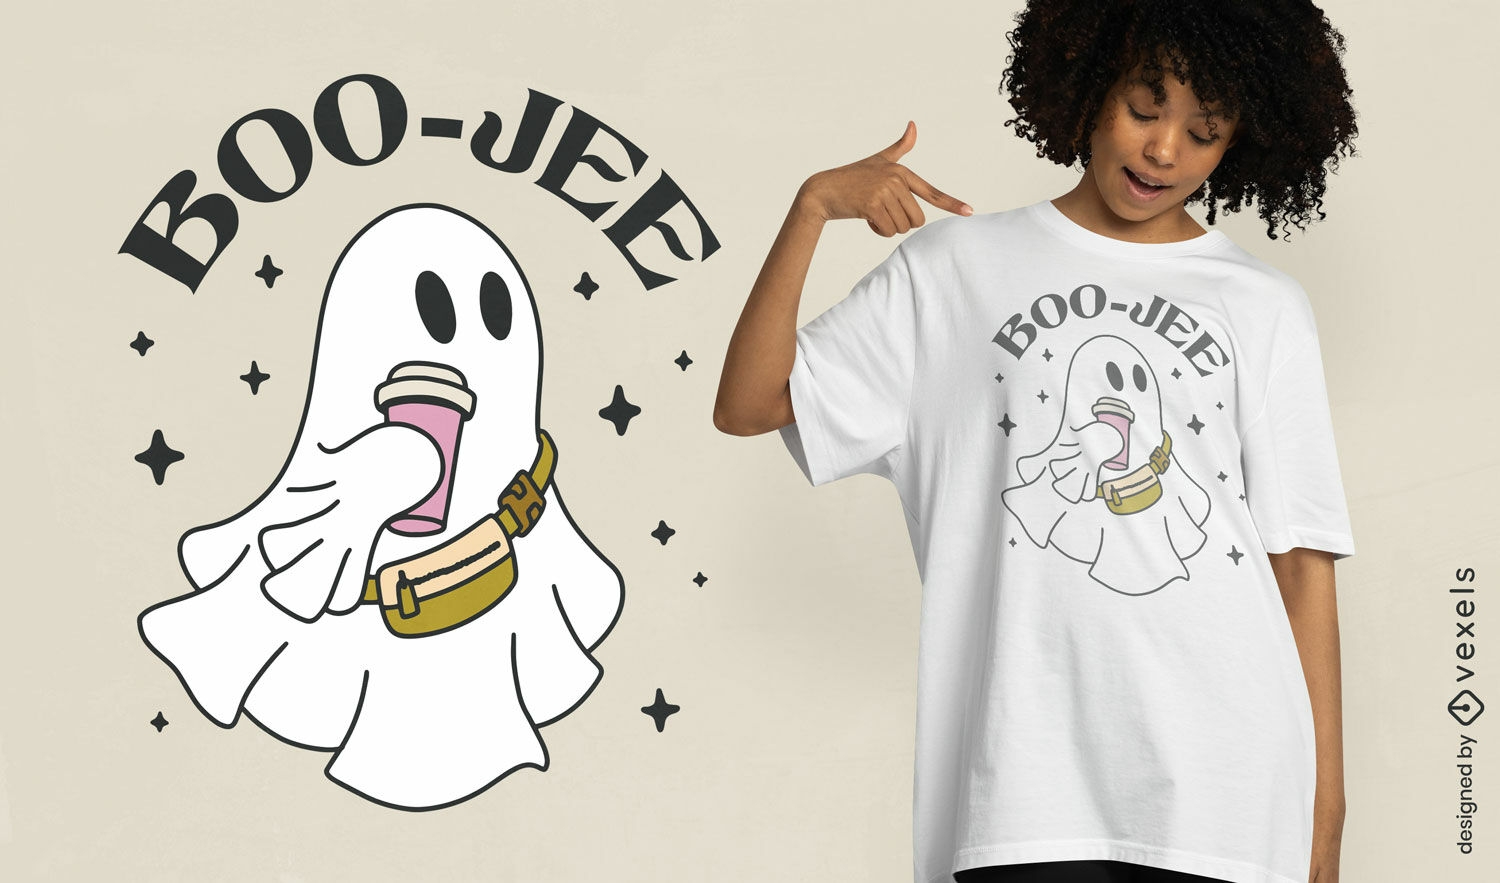 Boo-jee ghost t-shirt design